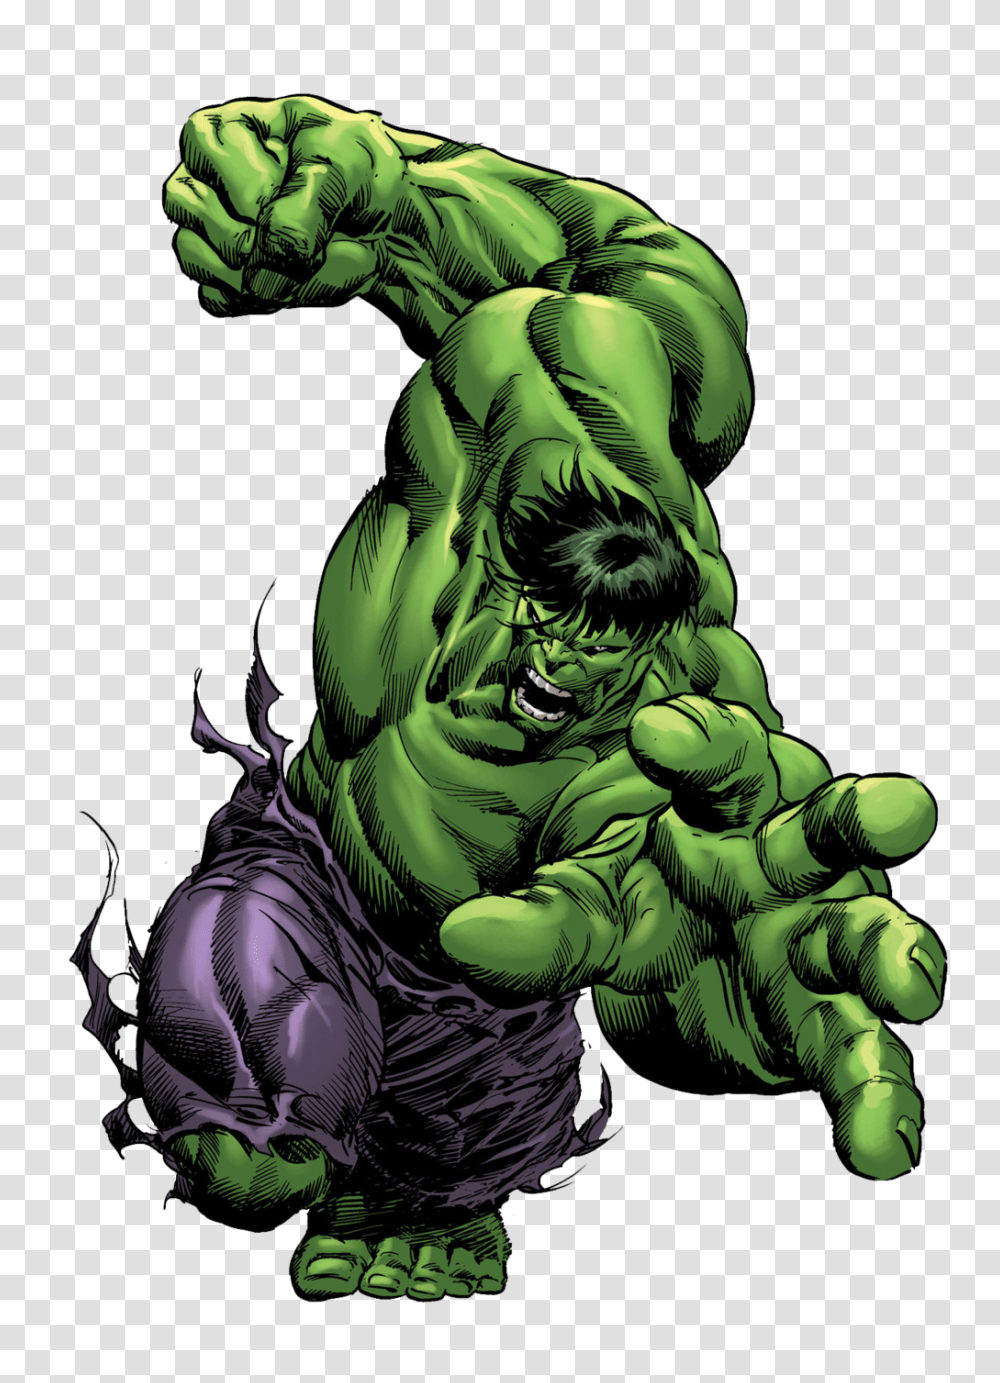 Marvels Incredible Hulk Images, Batman Transparent Png